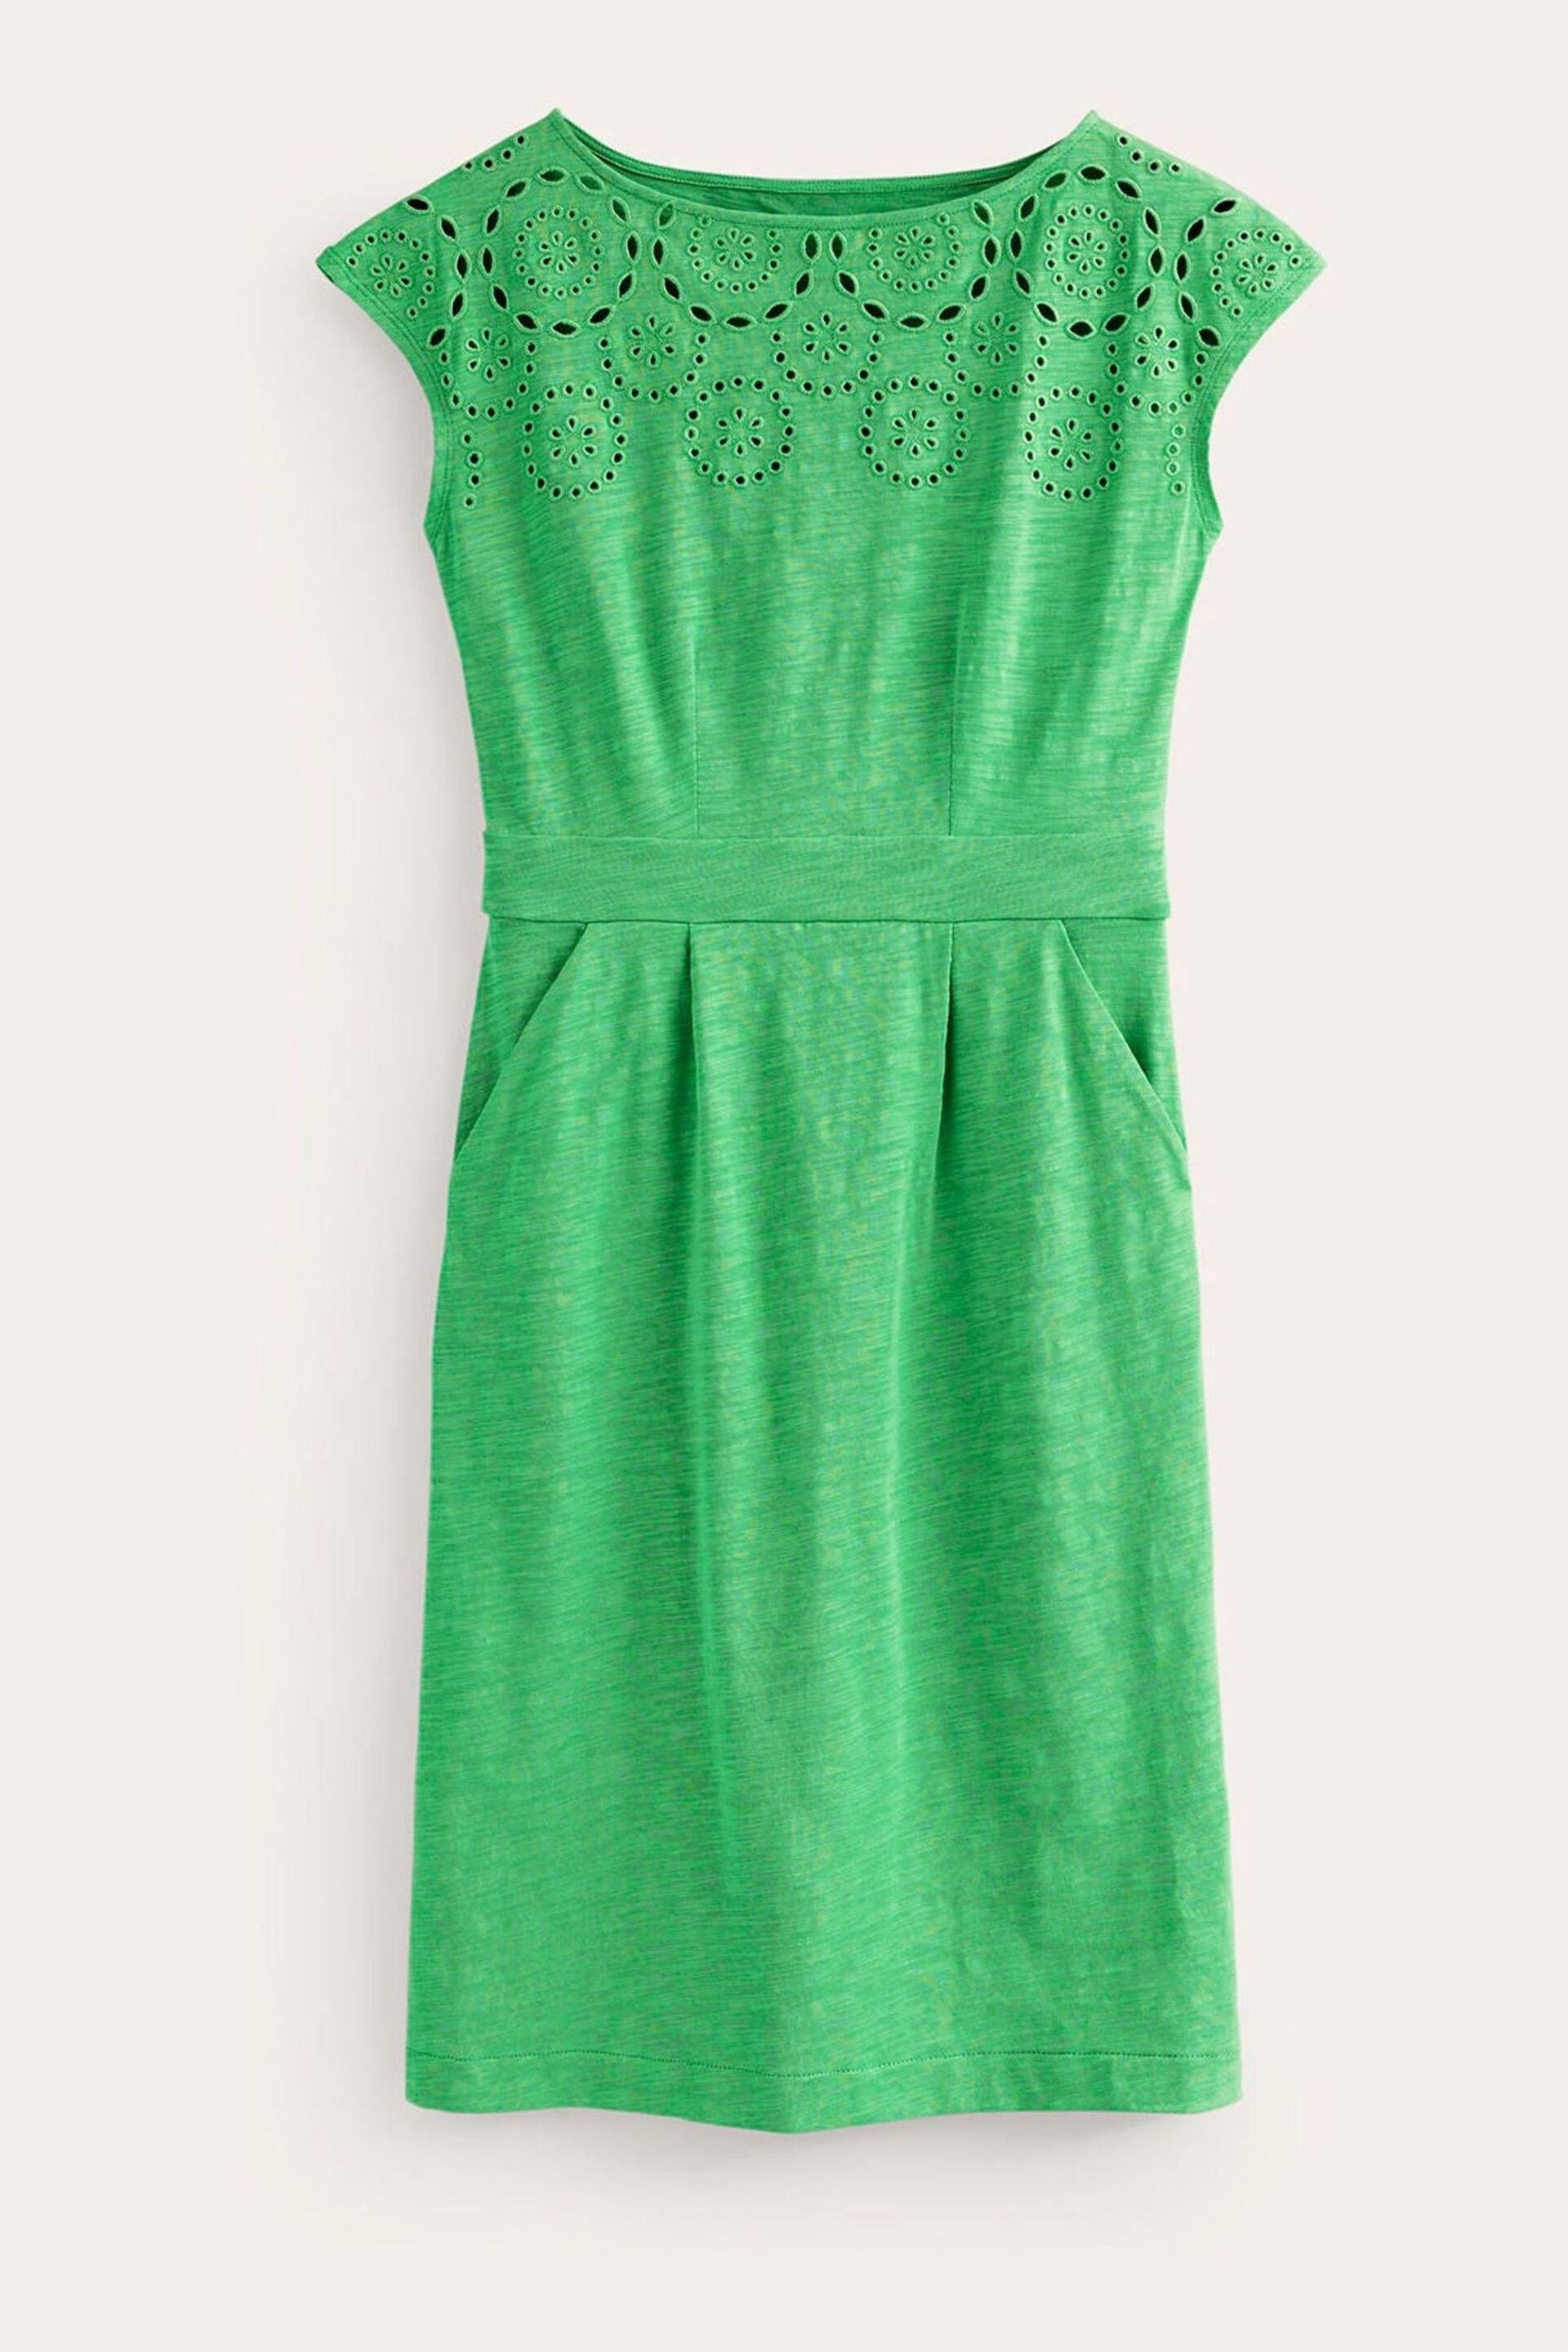 Boden Green Florrie Broderie Jersey Dress - Image 5 of 5